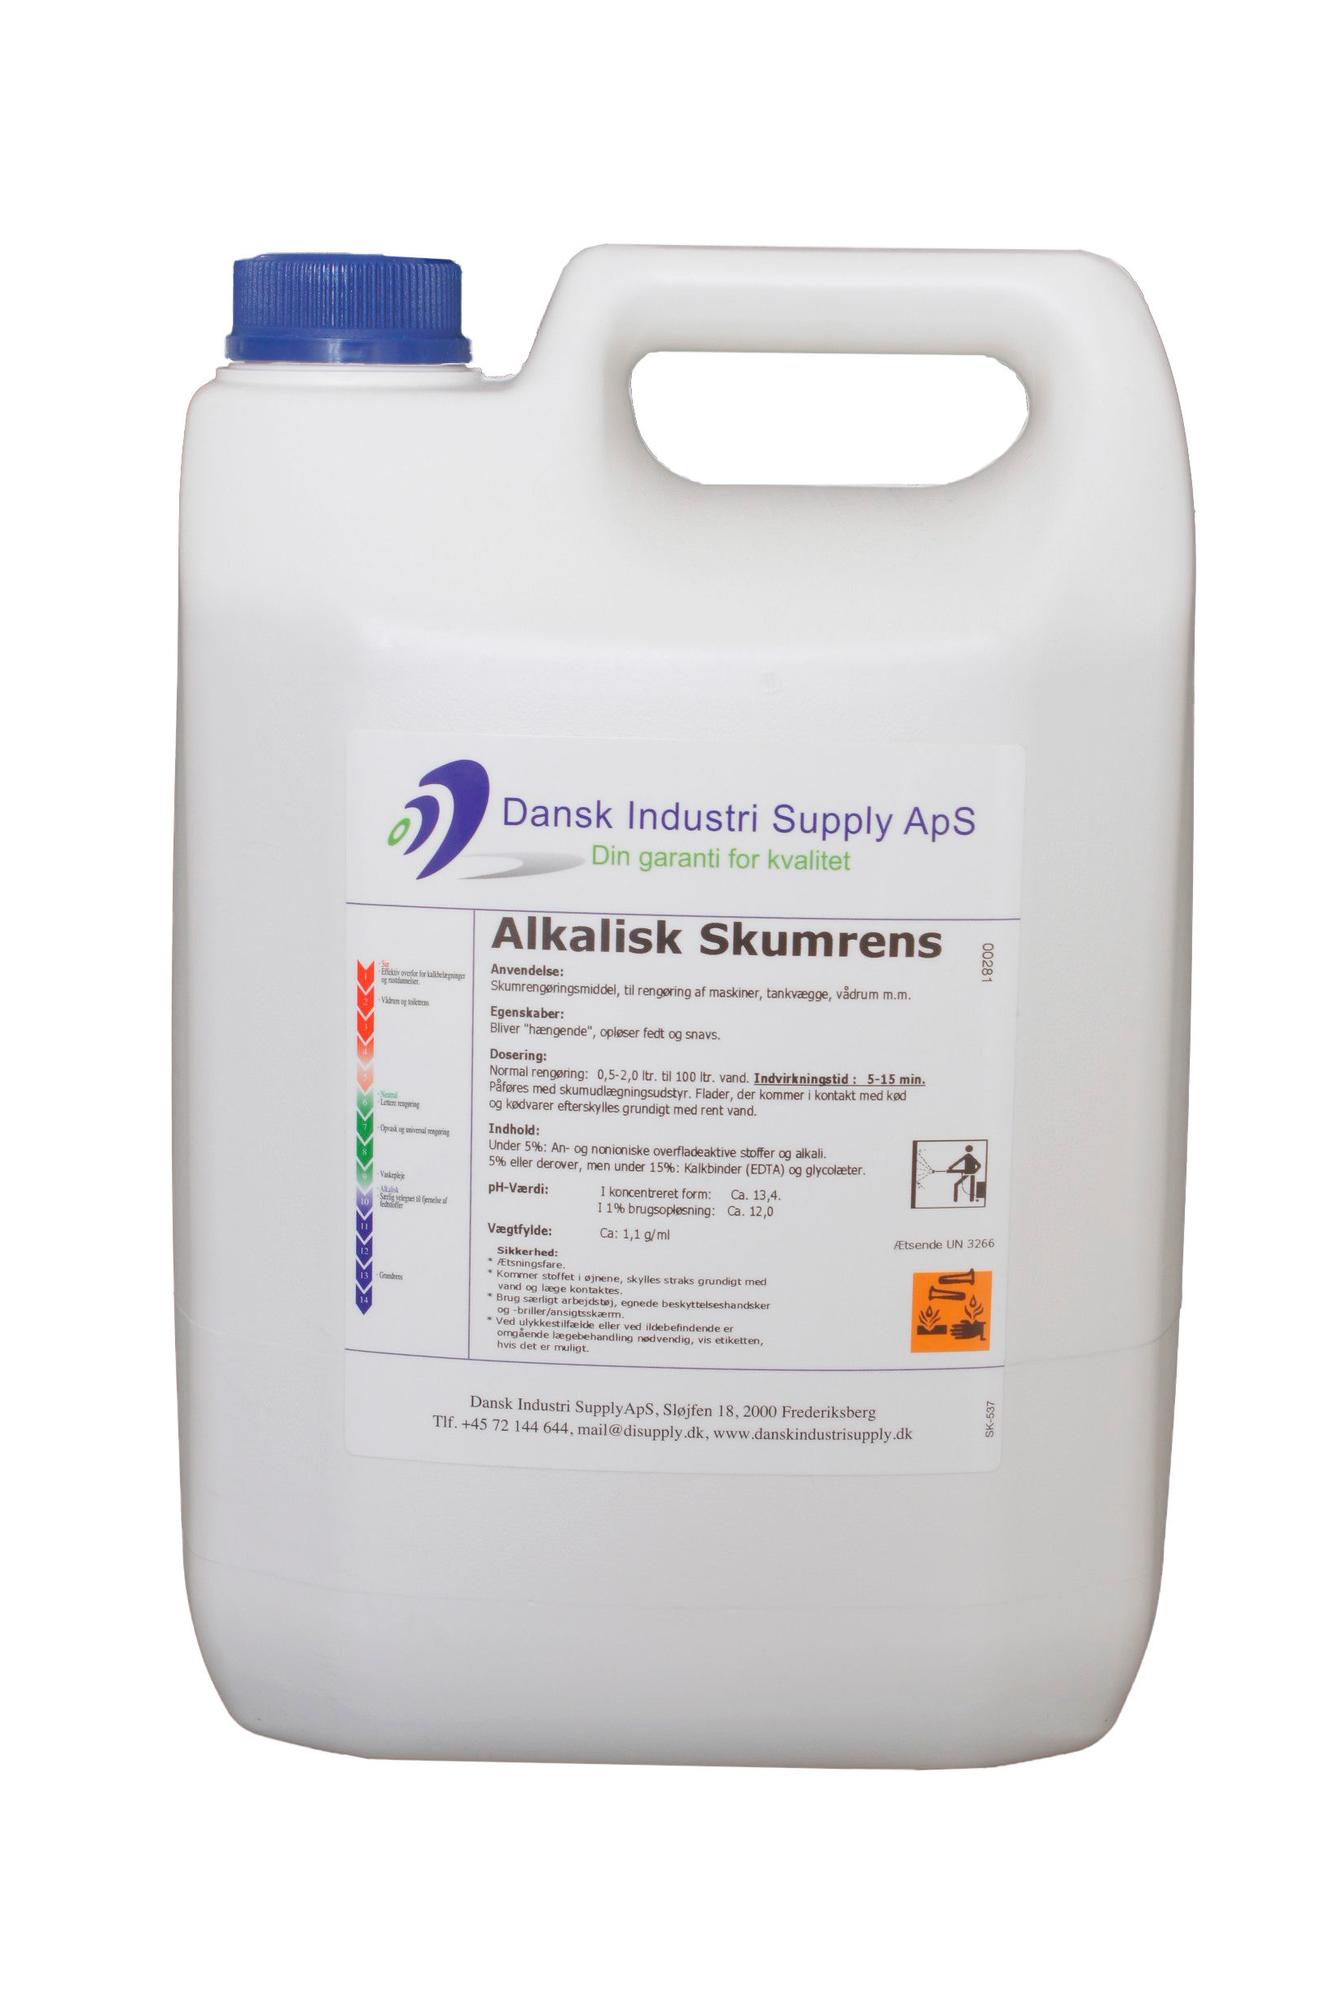 DIS alkalisk skumrens 5 liter (3) Dansk Industri